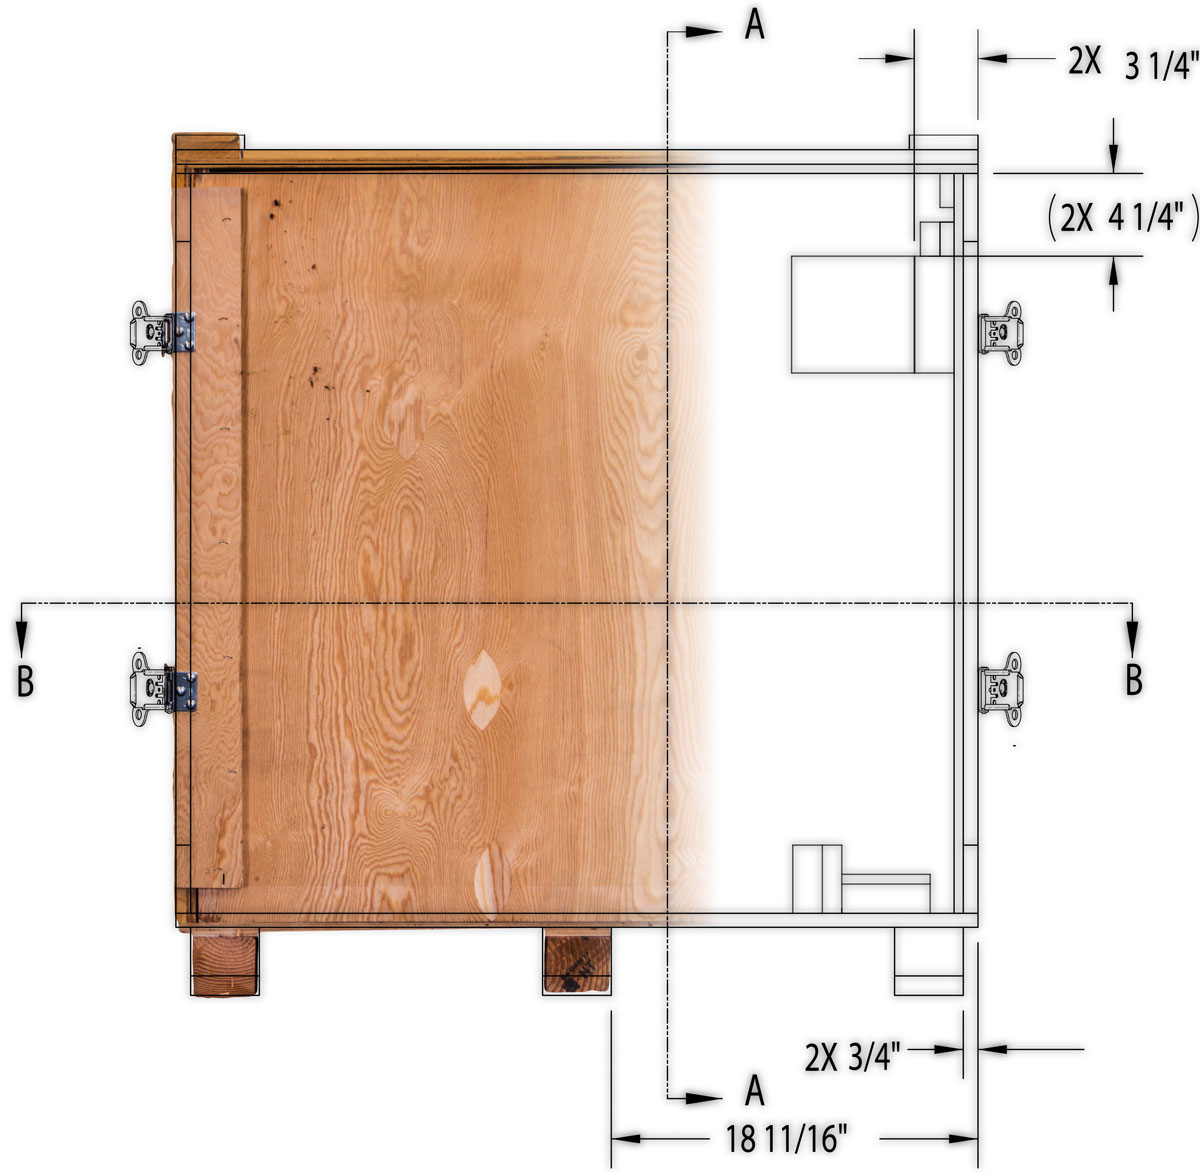 Wood Crate Measurements | Wasatch Container, North Salt Lake, Utah, USA